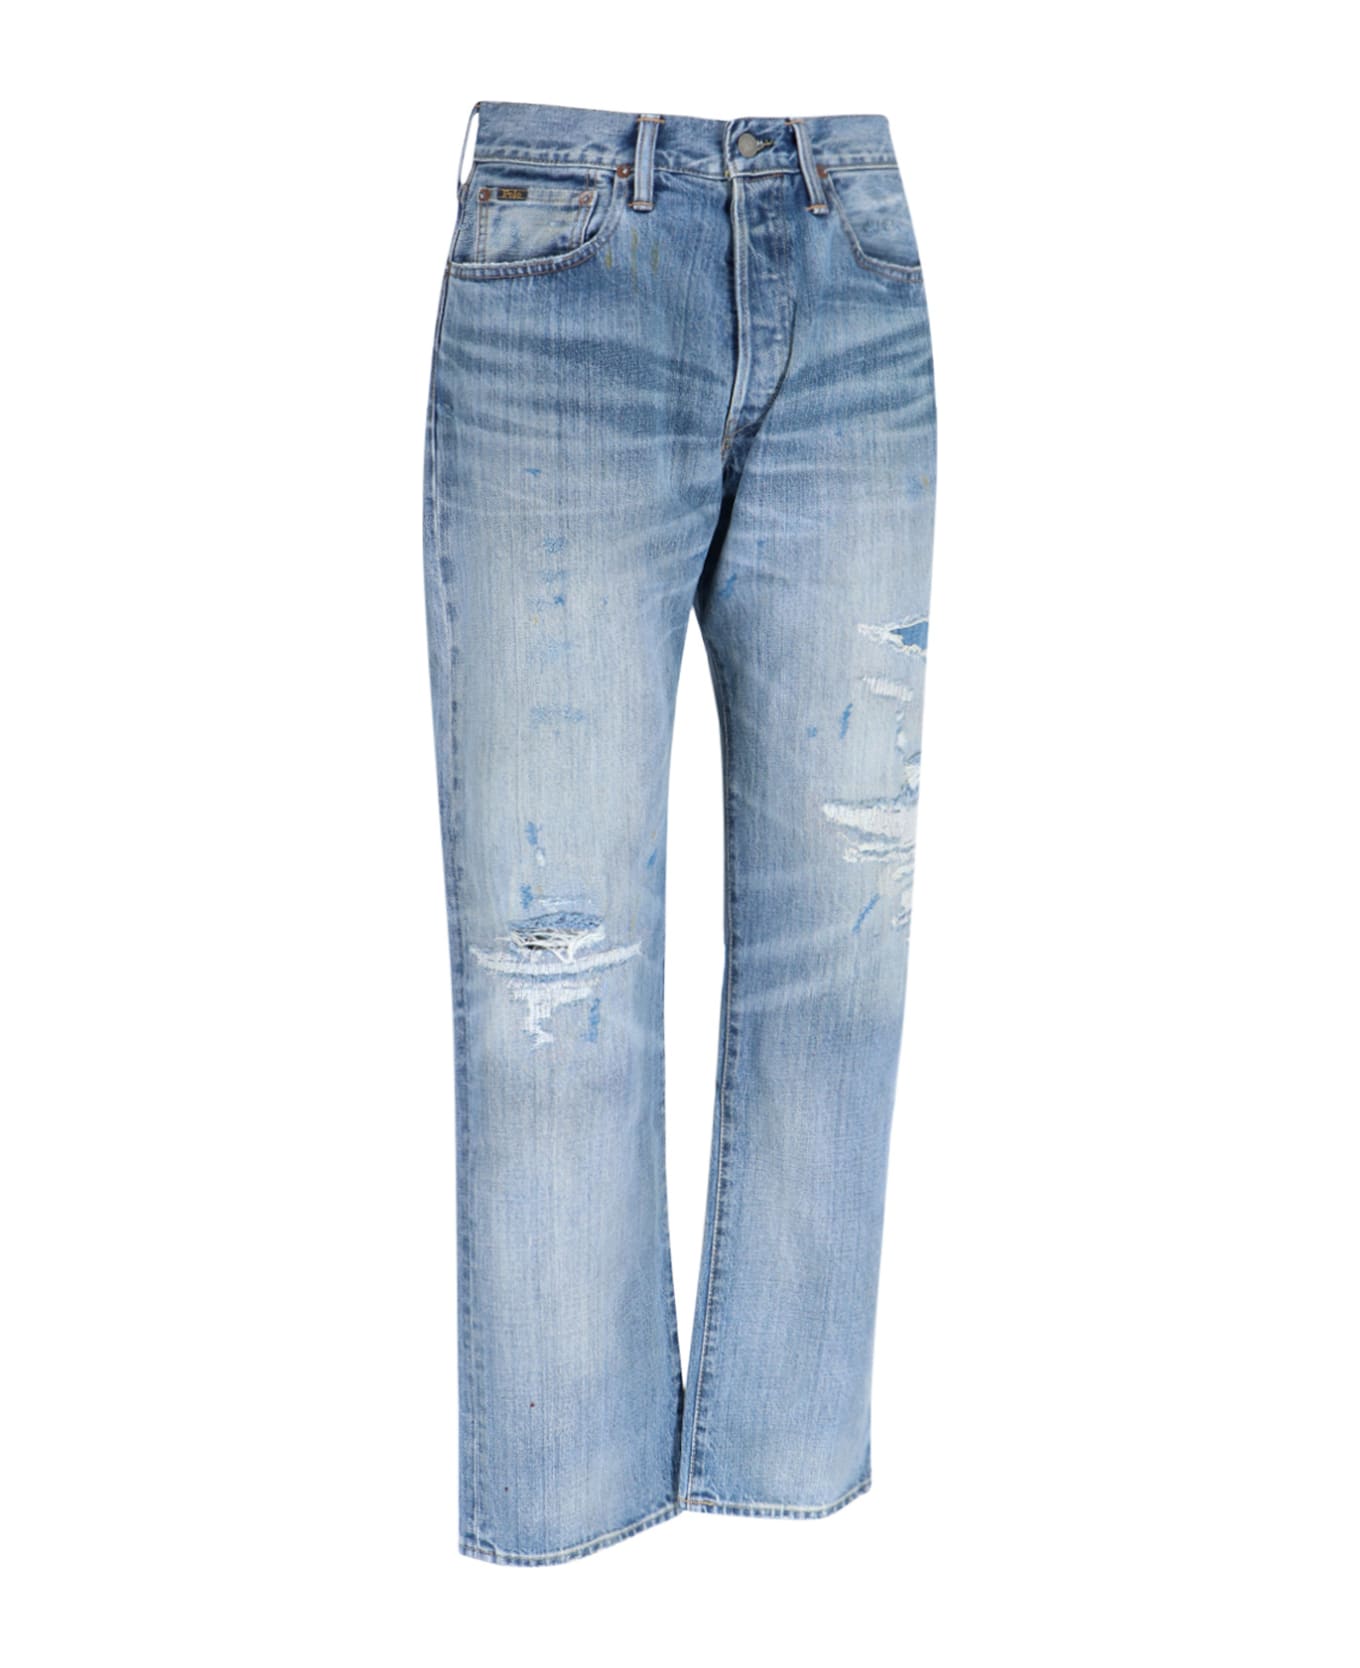 Polo Ralph Lauren Destroyed Details Jeans - Light Blue